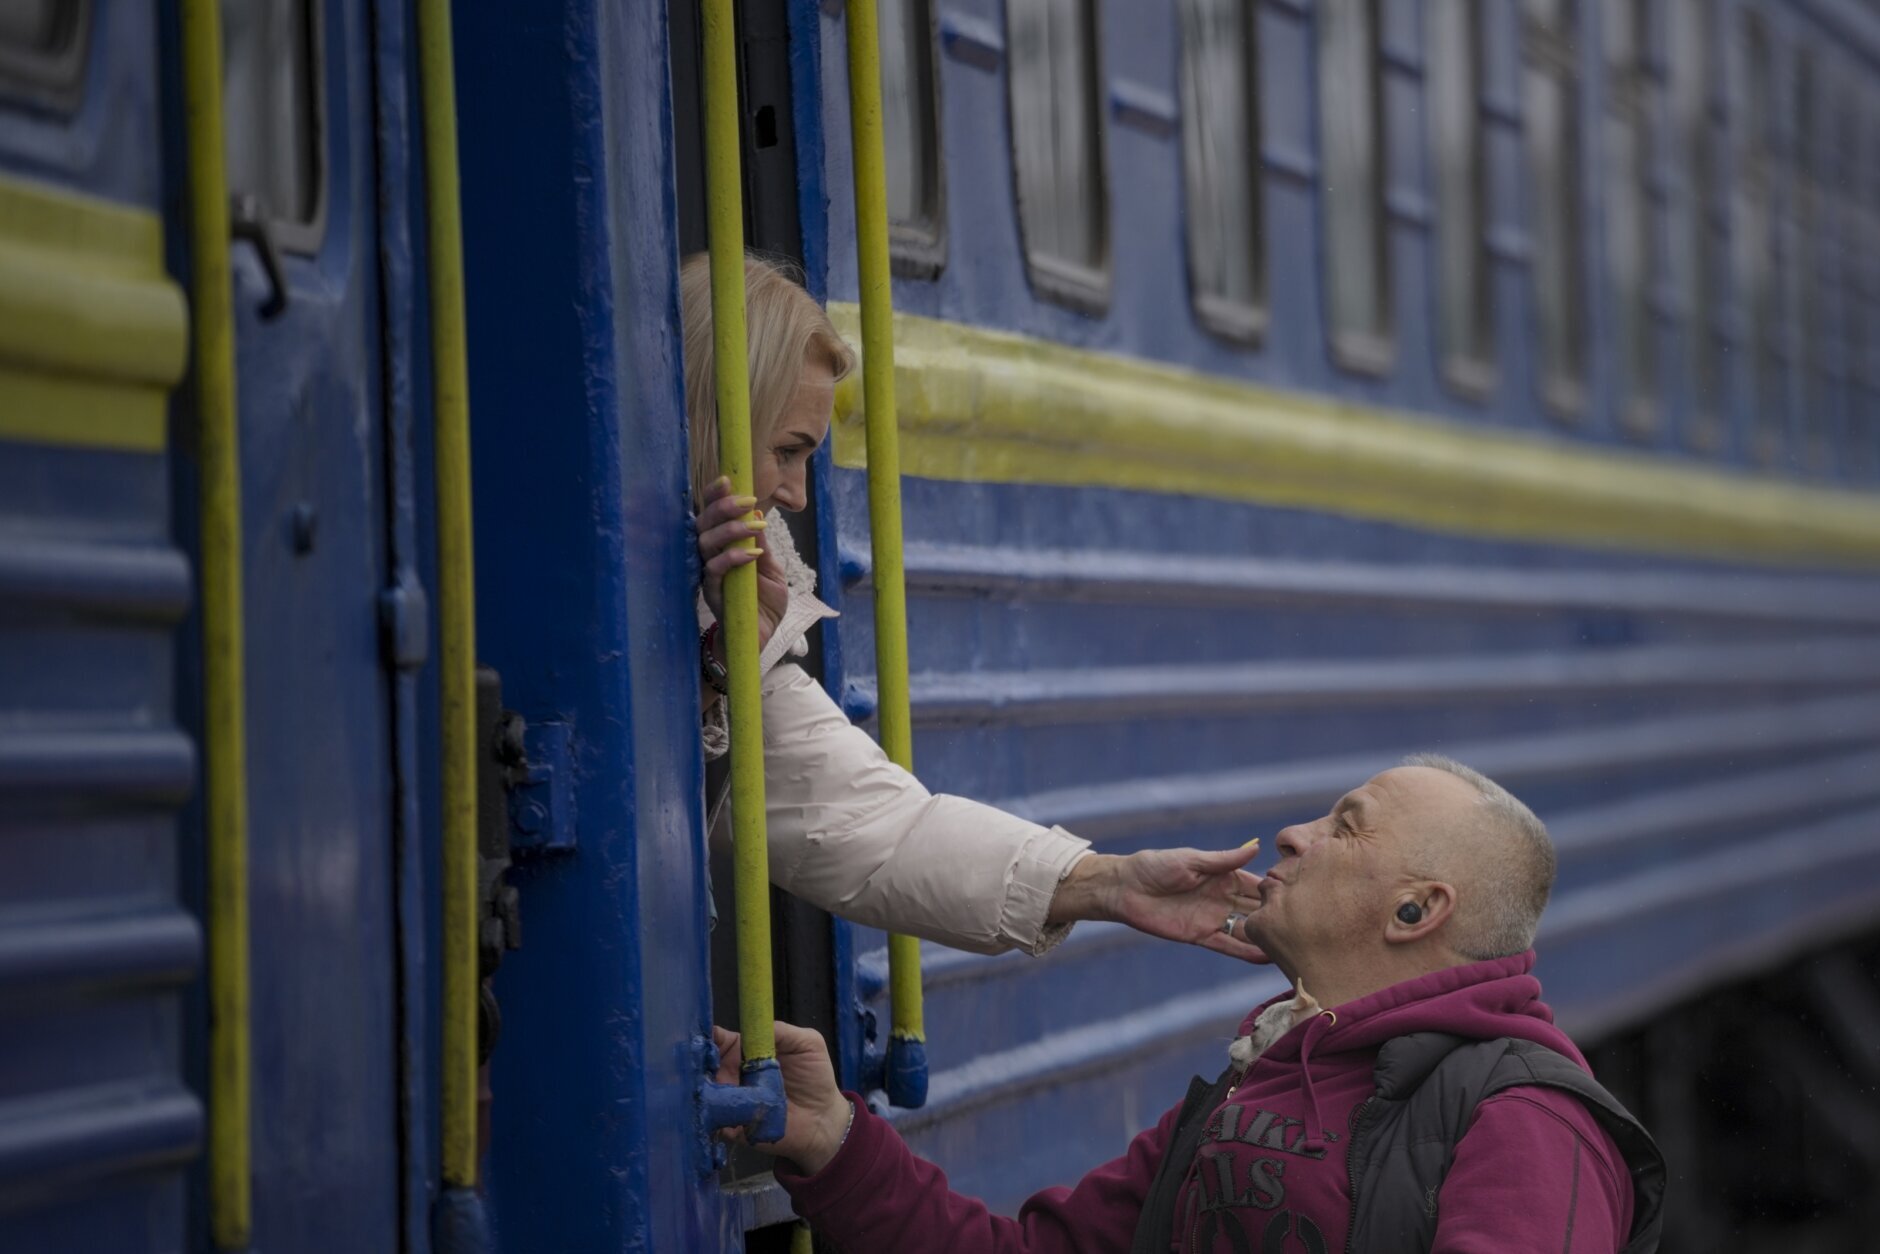 A woman bid a man good bye after boarding a Lviv bound train, in Kyiv, Ukraine, Thursday, March 3, 2022. (AP Photo/Vadim Ghirda)